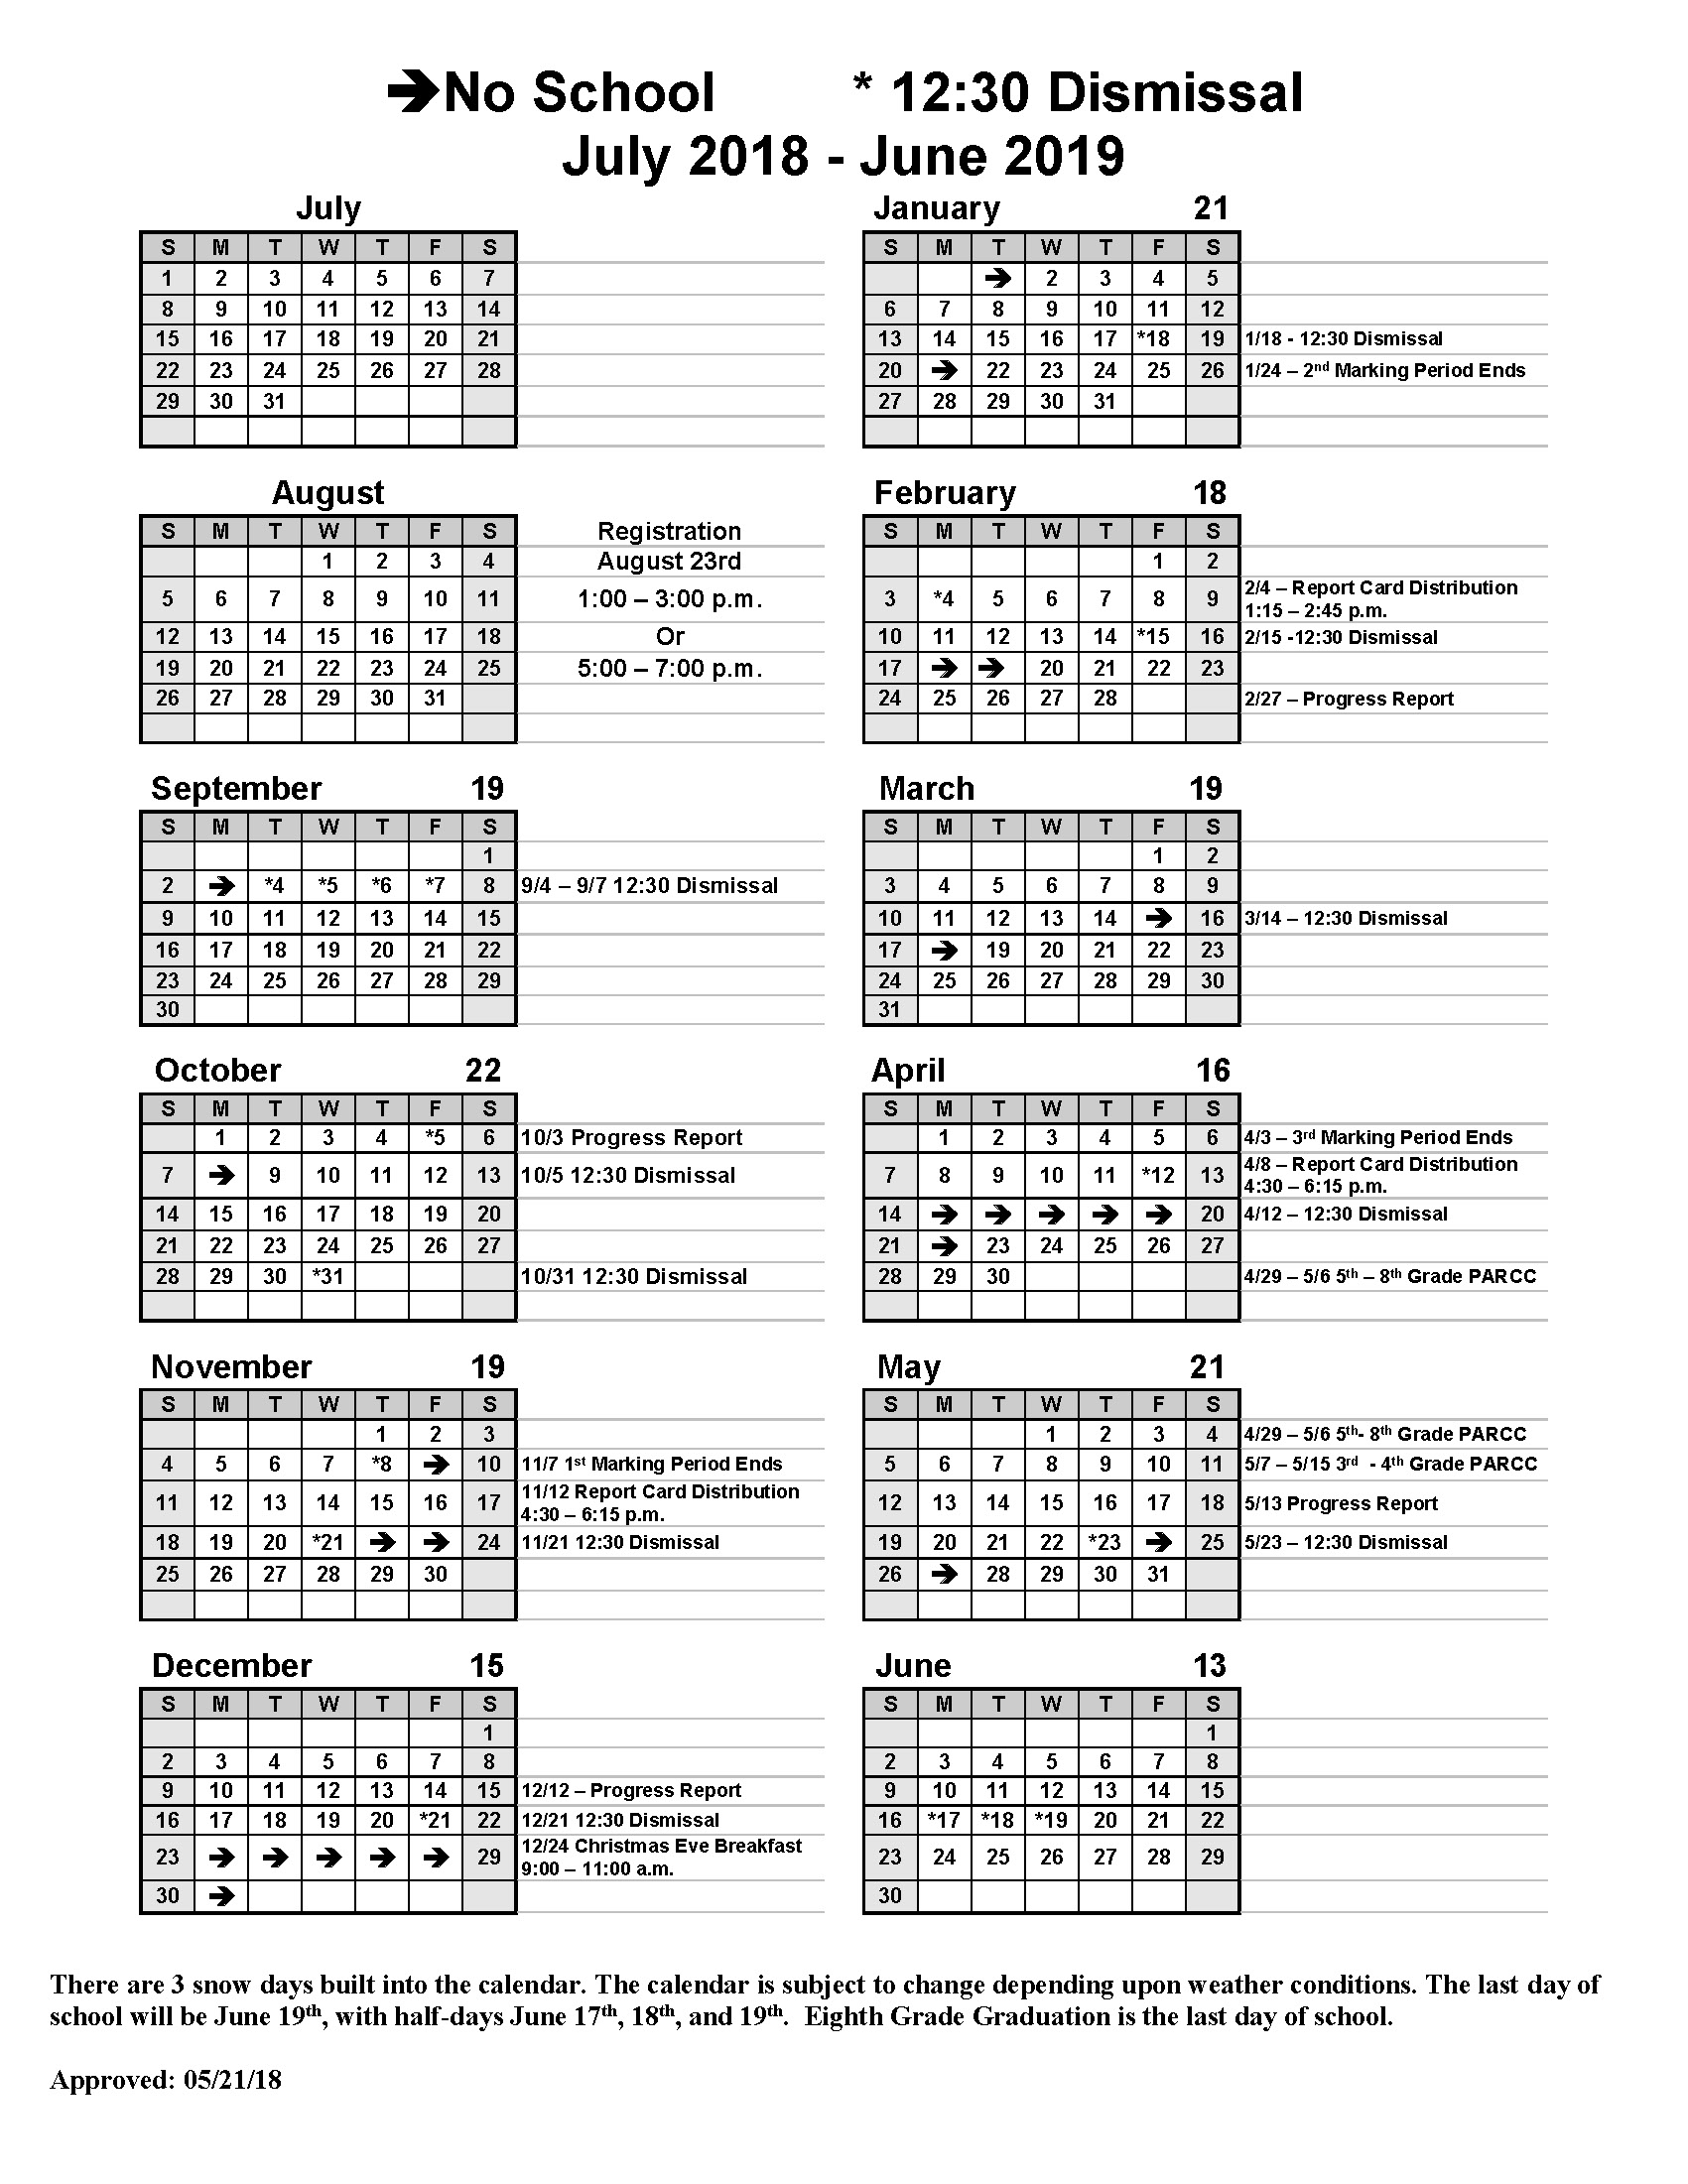 Annual Calendar Soaring Heights Charter School